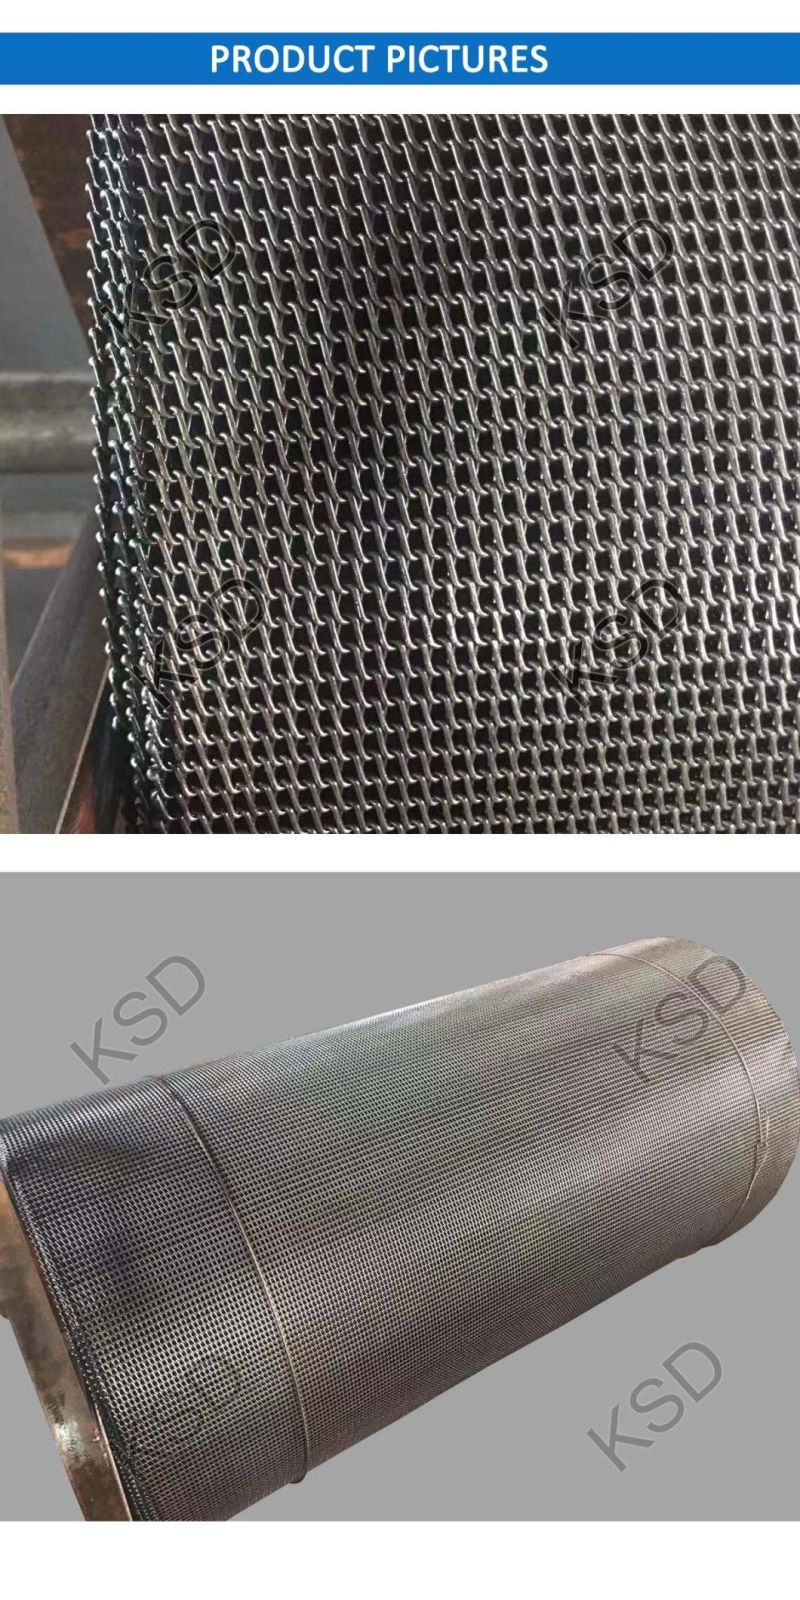 Long Lasting Carbon Steel Rolled Baking Oven Belt Z47 / Z47r for Biscuit Industry